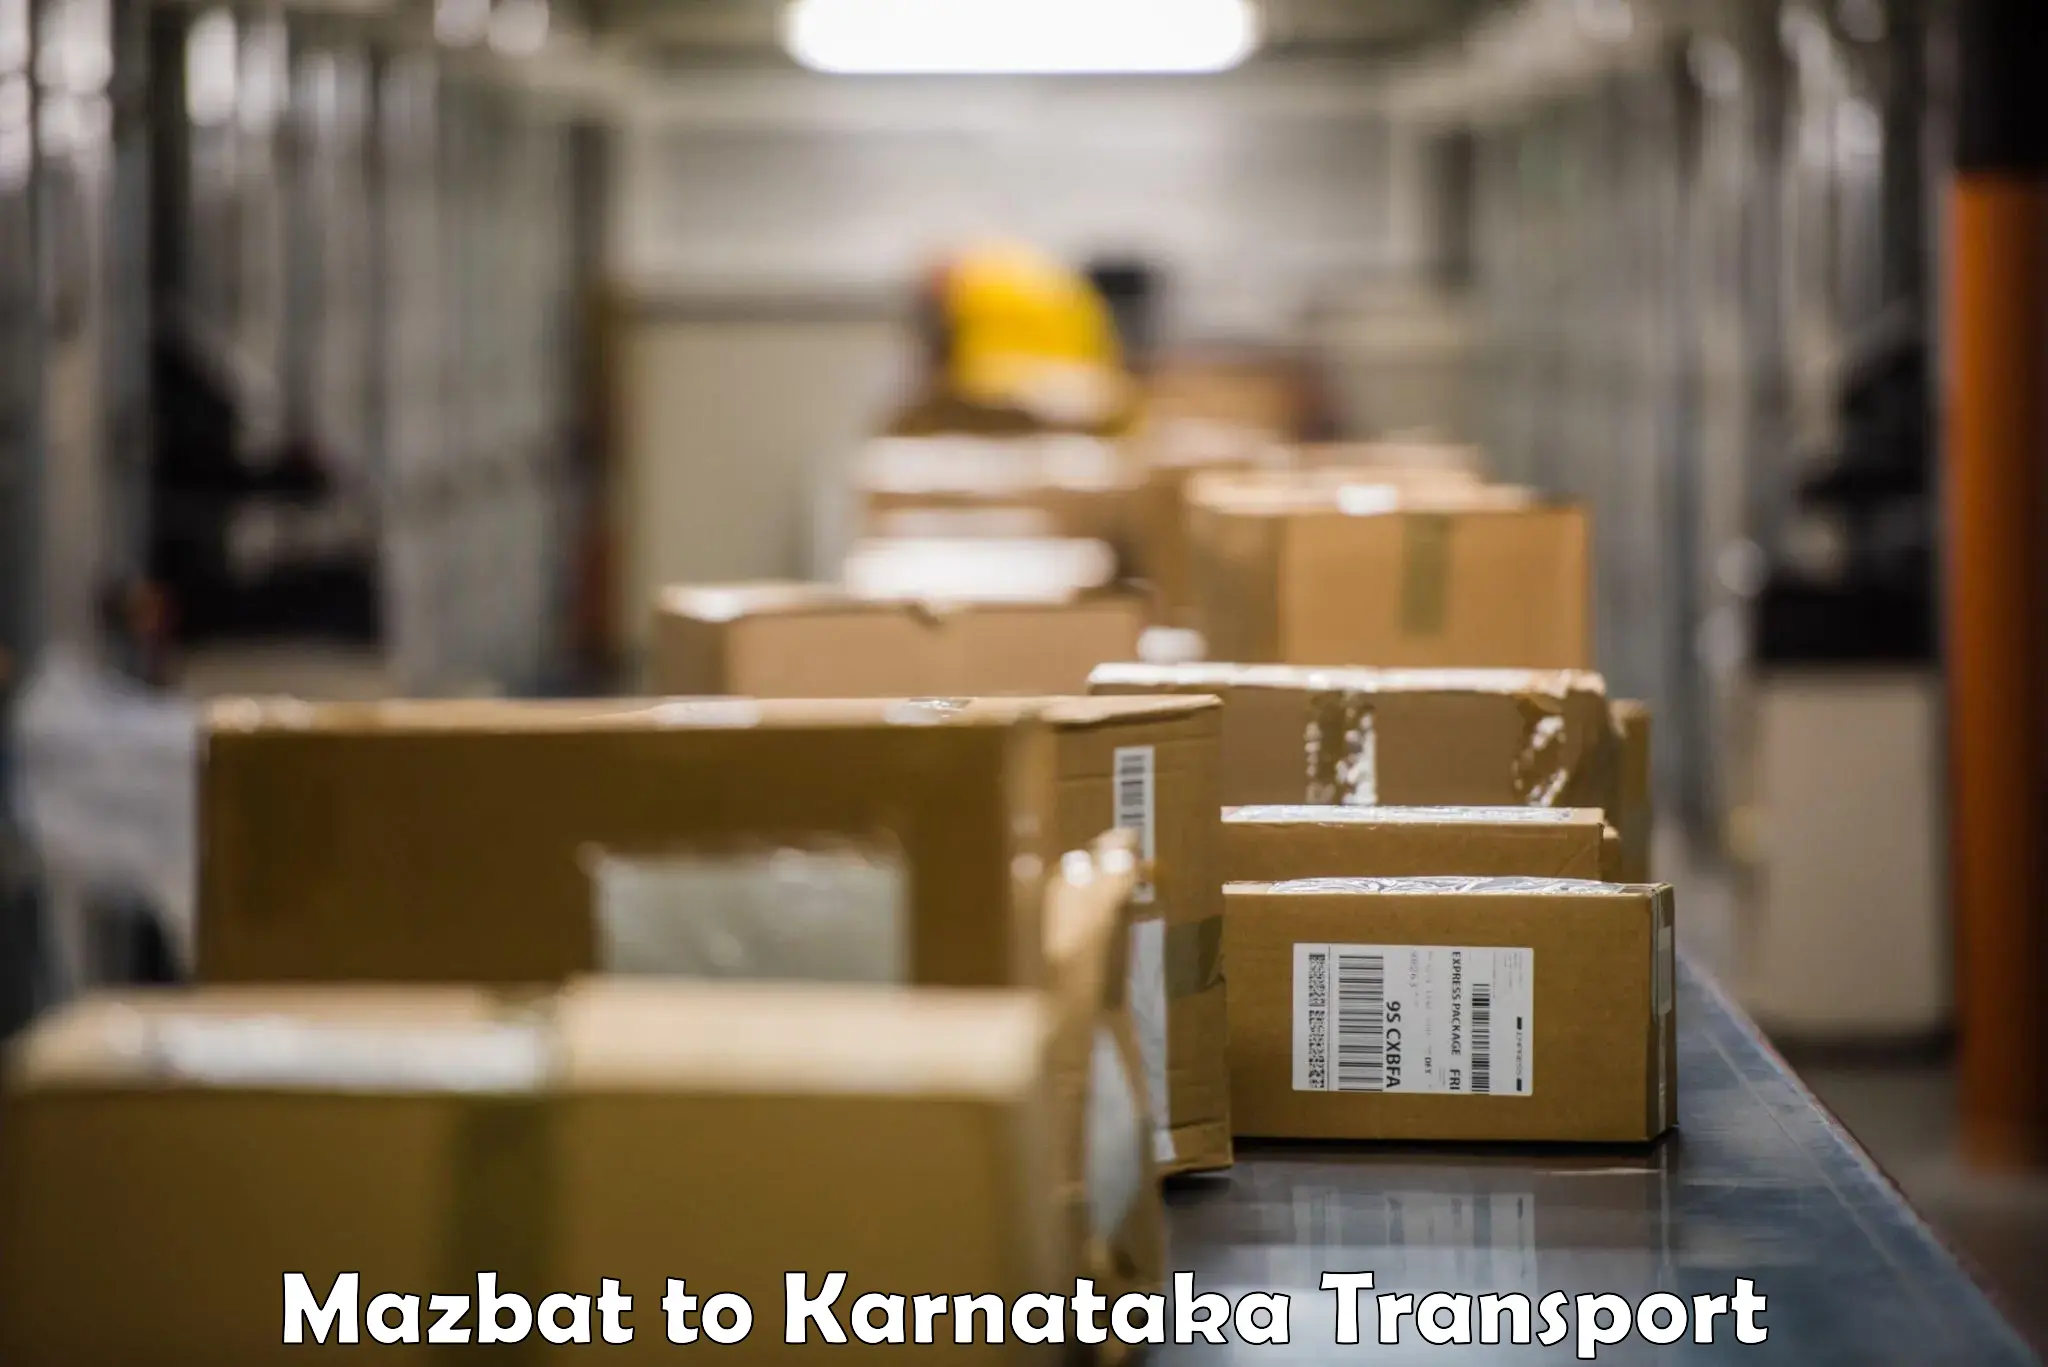 Online transport service Mazbat to Bangalore